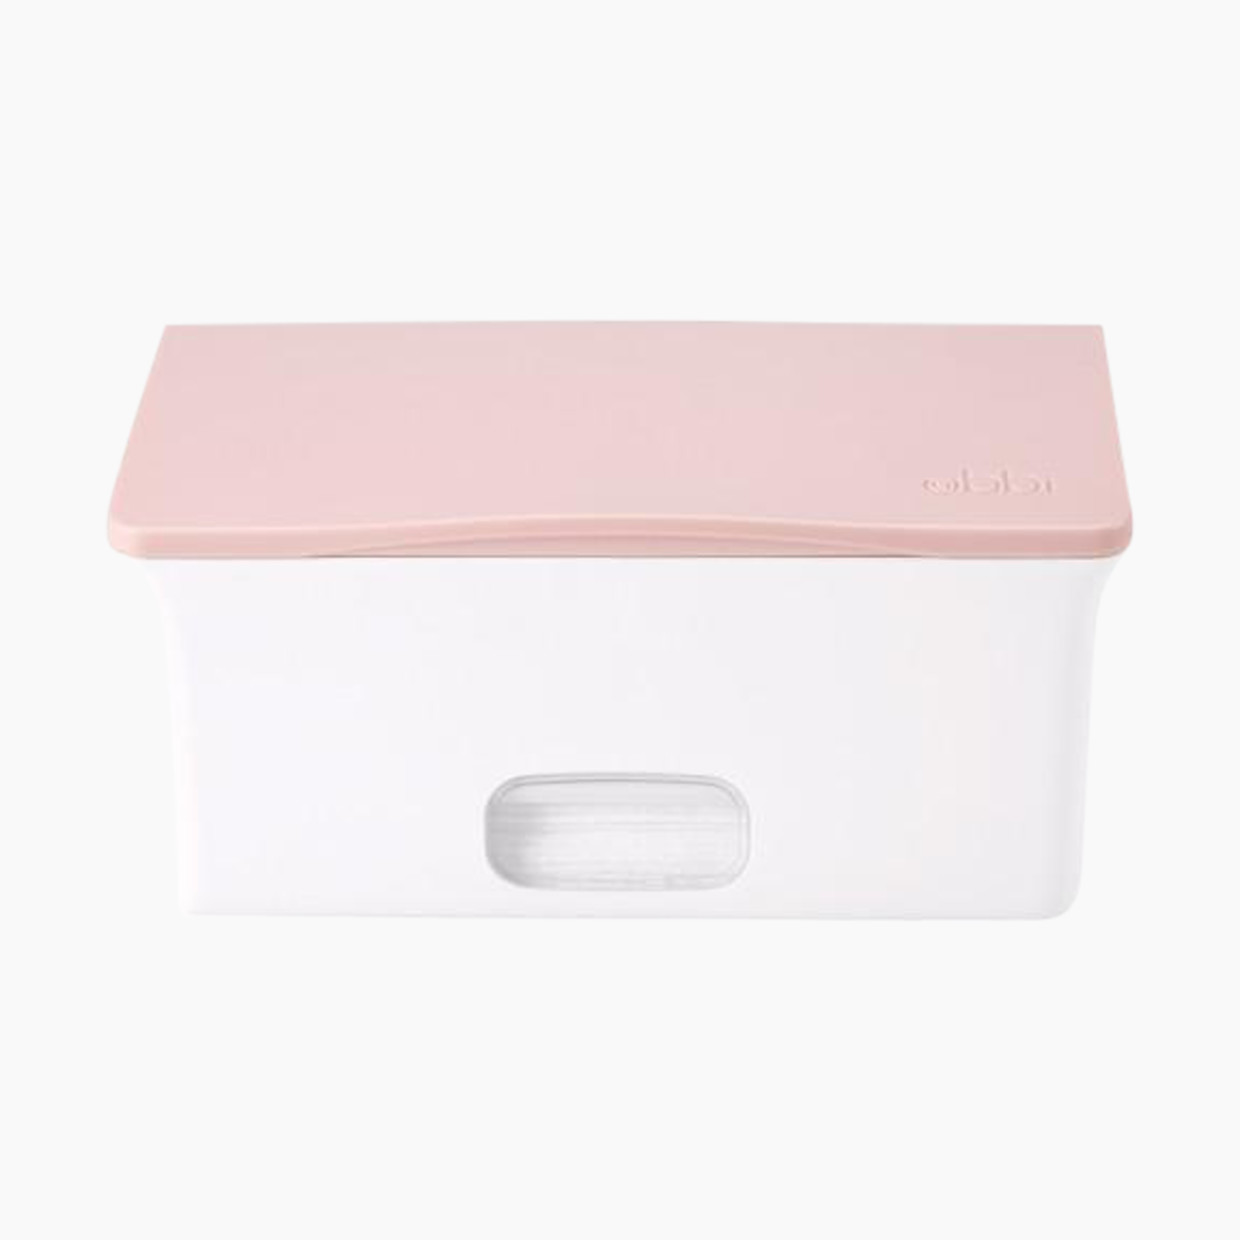 Ubbi Diaper Wipes Dispenser - Light Pink.